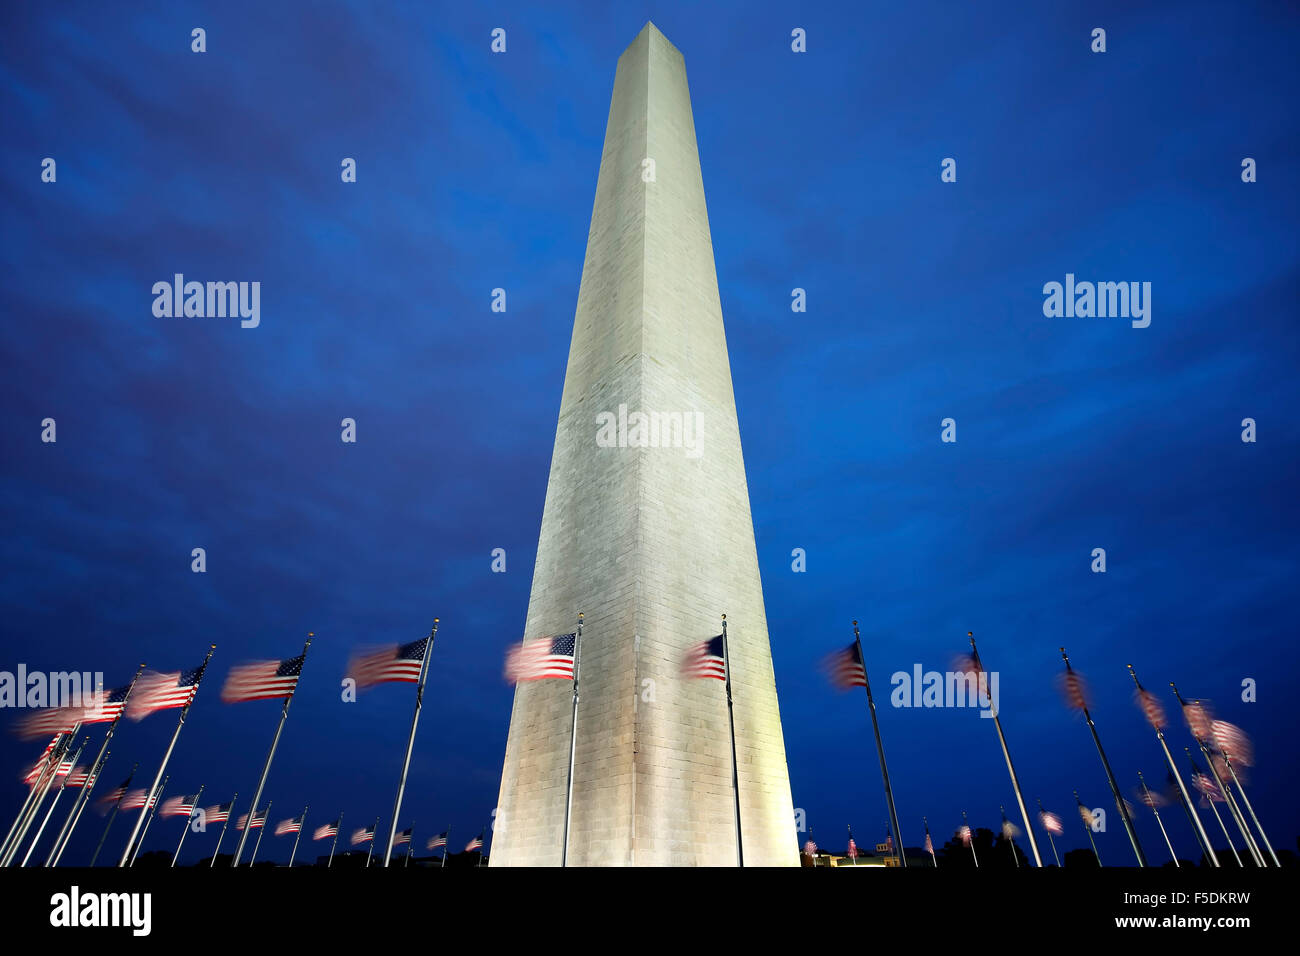 Washington Memorial and American Flags, Washington, District of Columbia USA Stock Photo